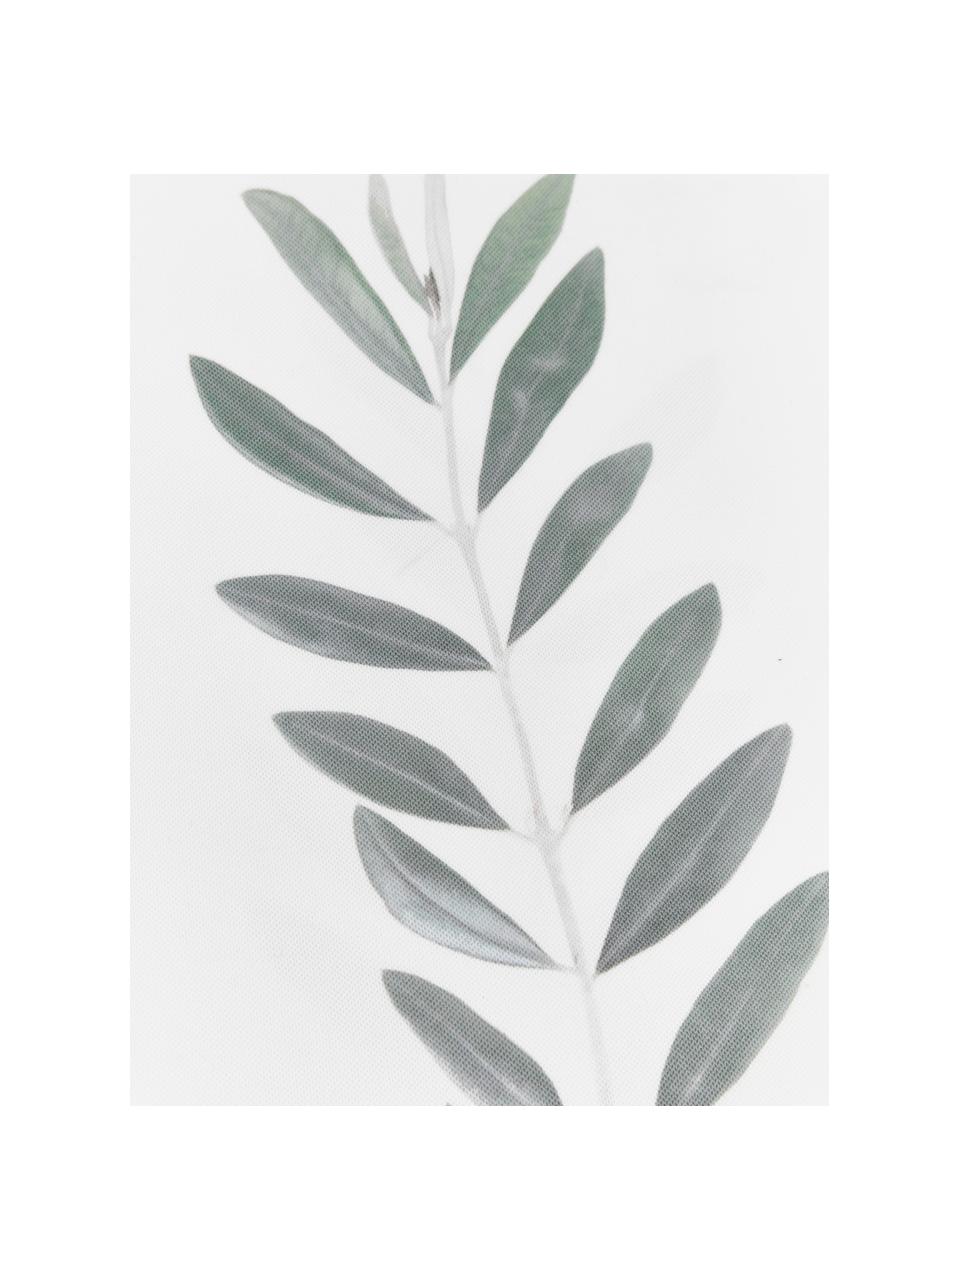 Kissenhülle Botanical mit Olivenzweig, 100% Polyester, Weiss, Grün, 40 x 40 cm